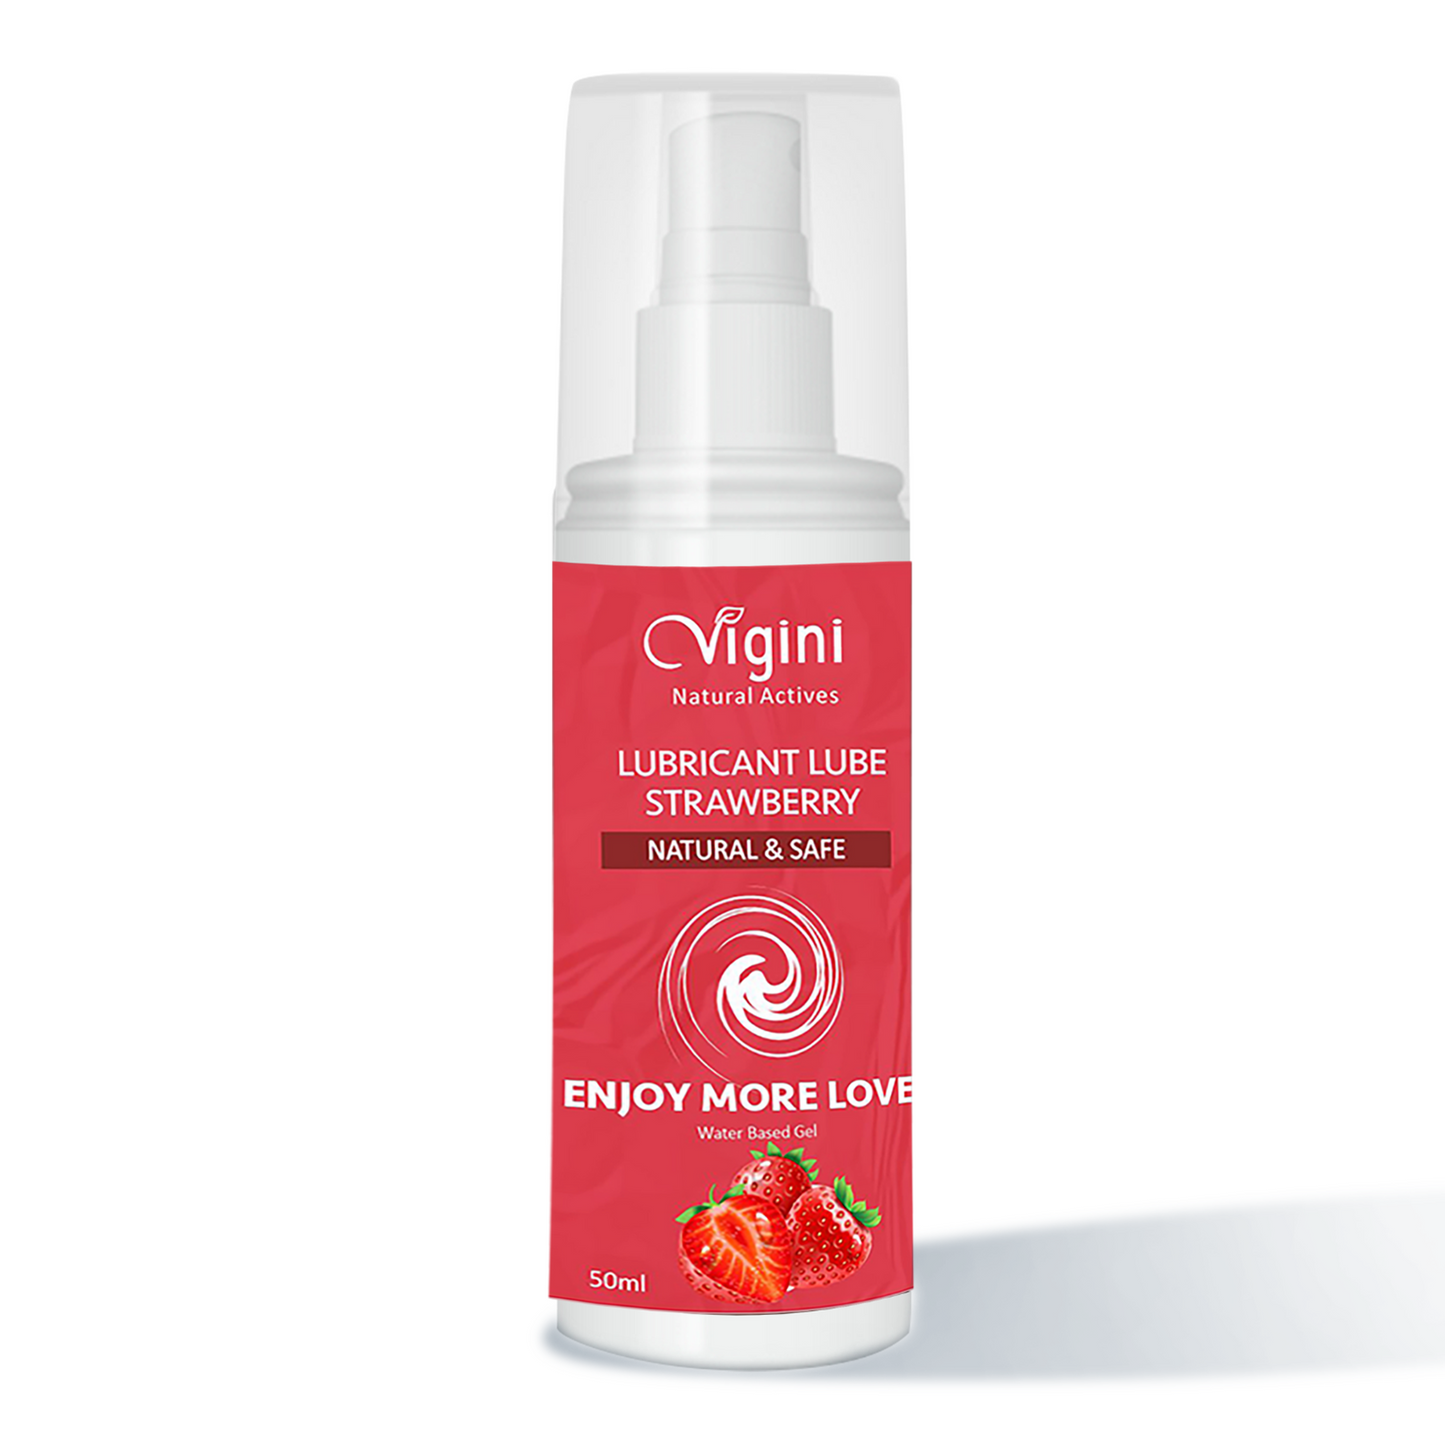 Vigini Natural Actives 润滑油草莓味，50ml